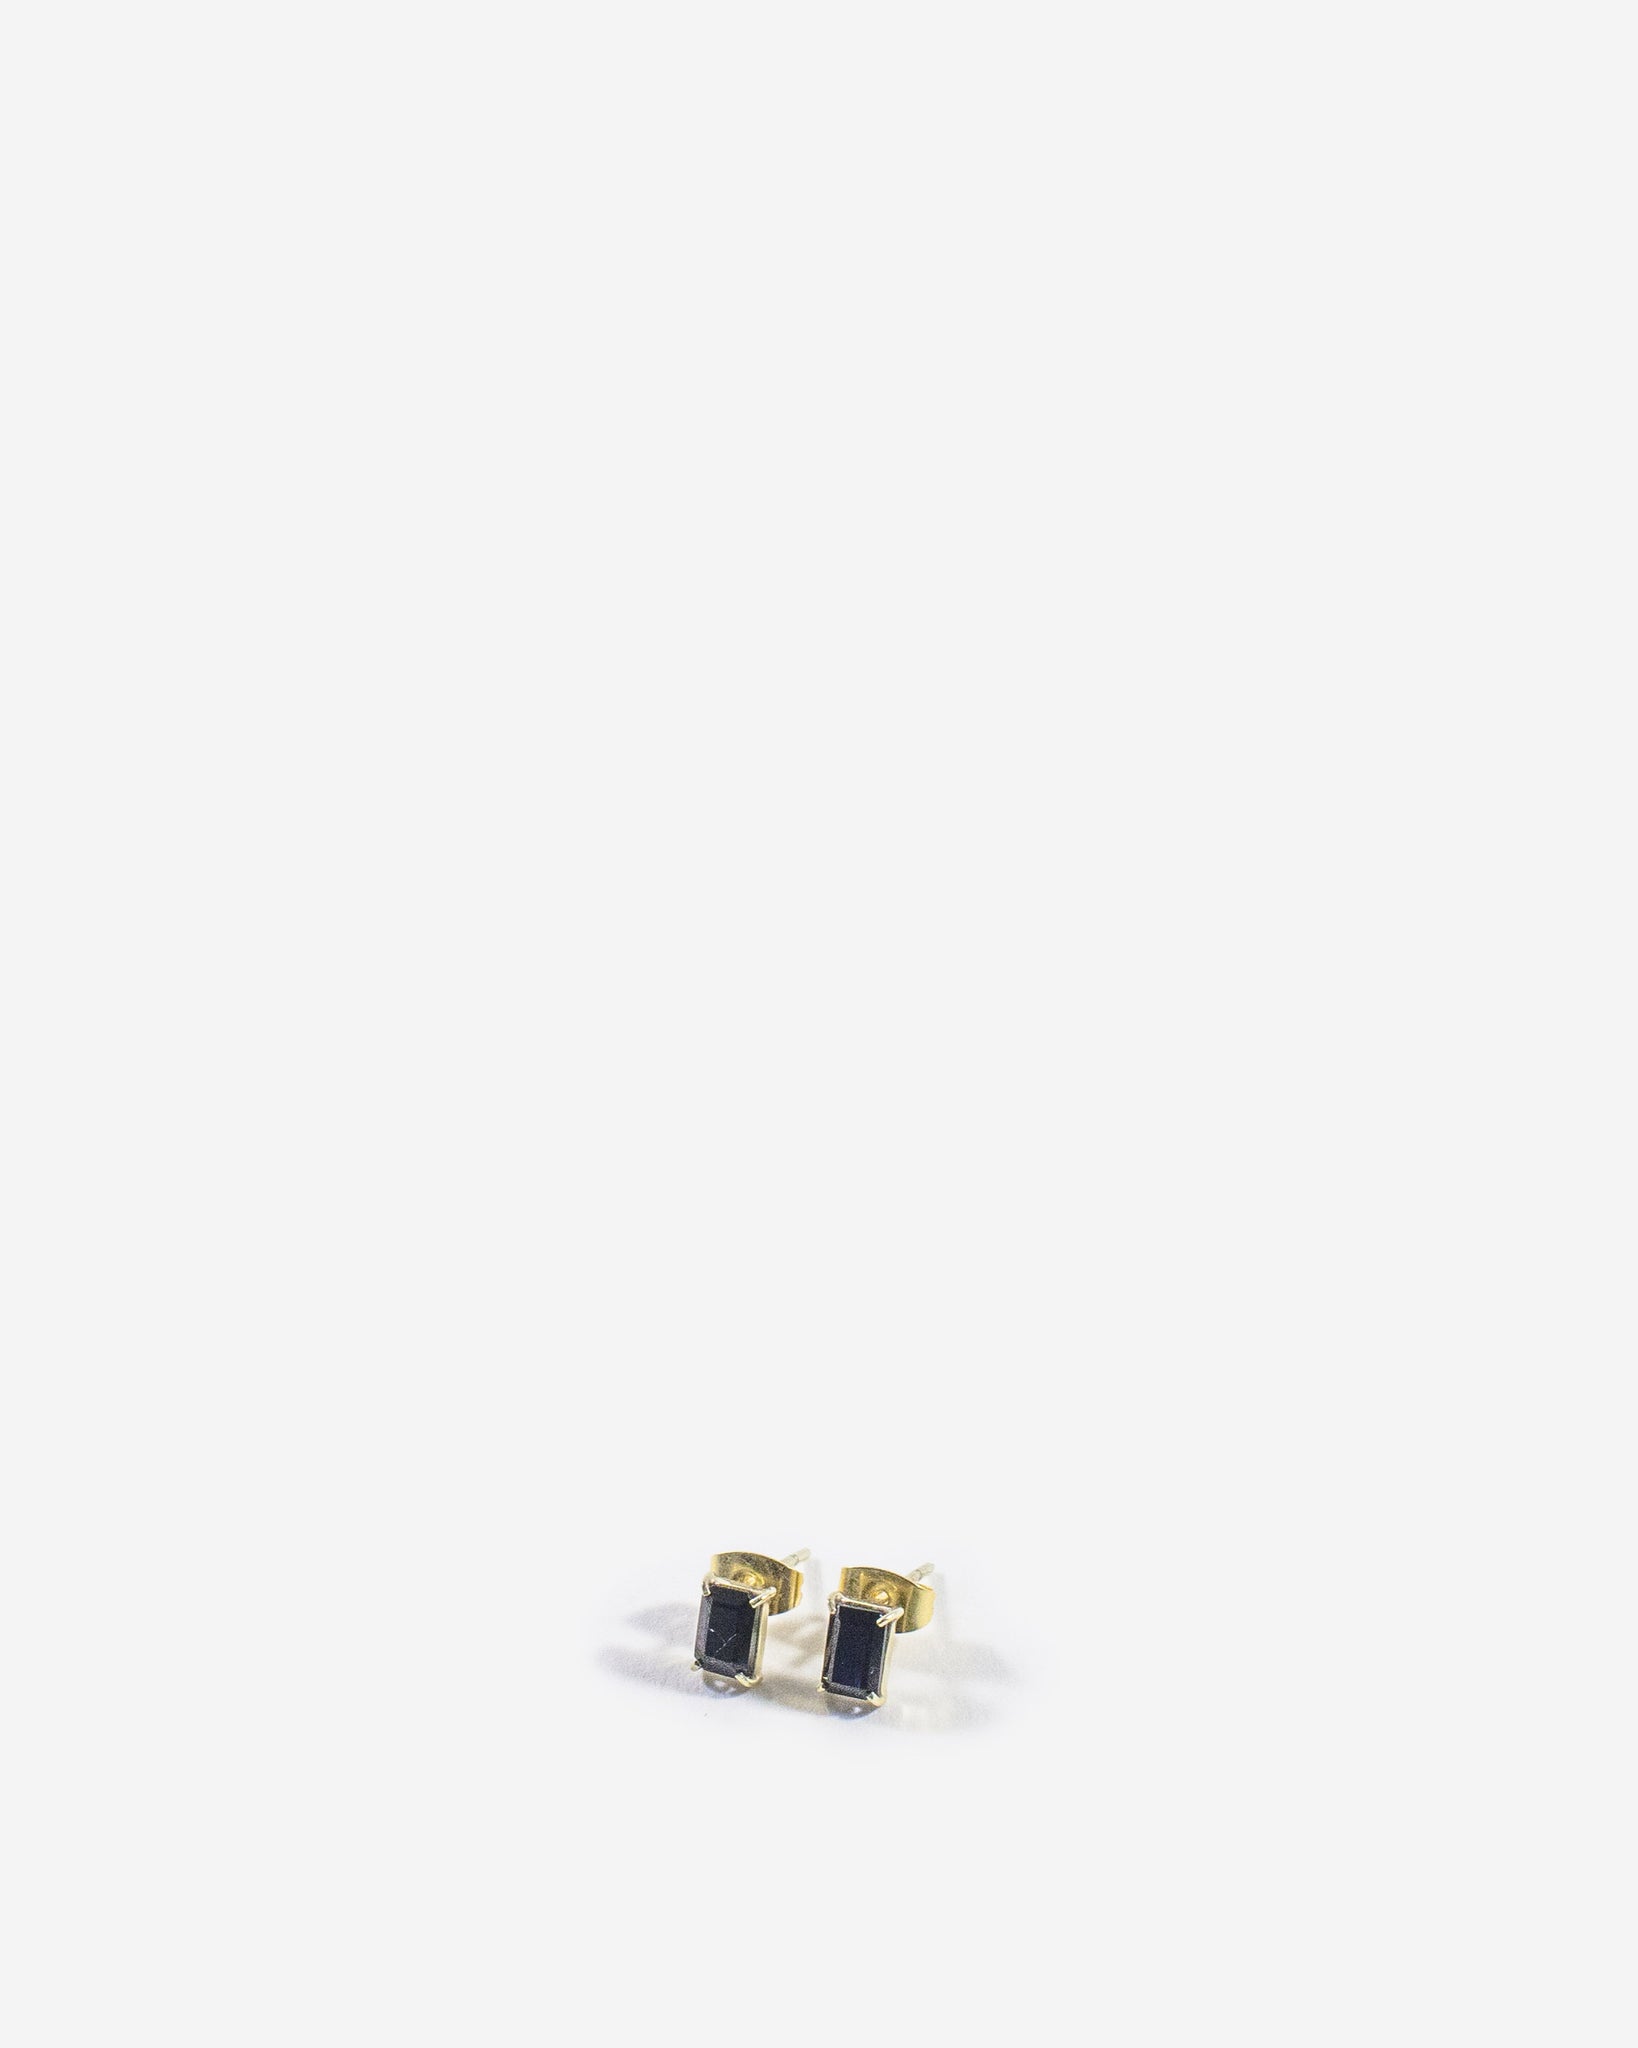 Gold black onyx earring / REC